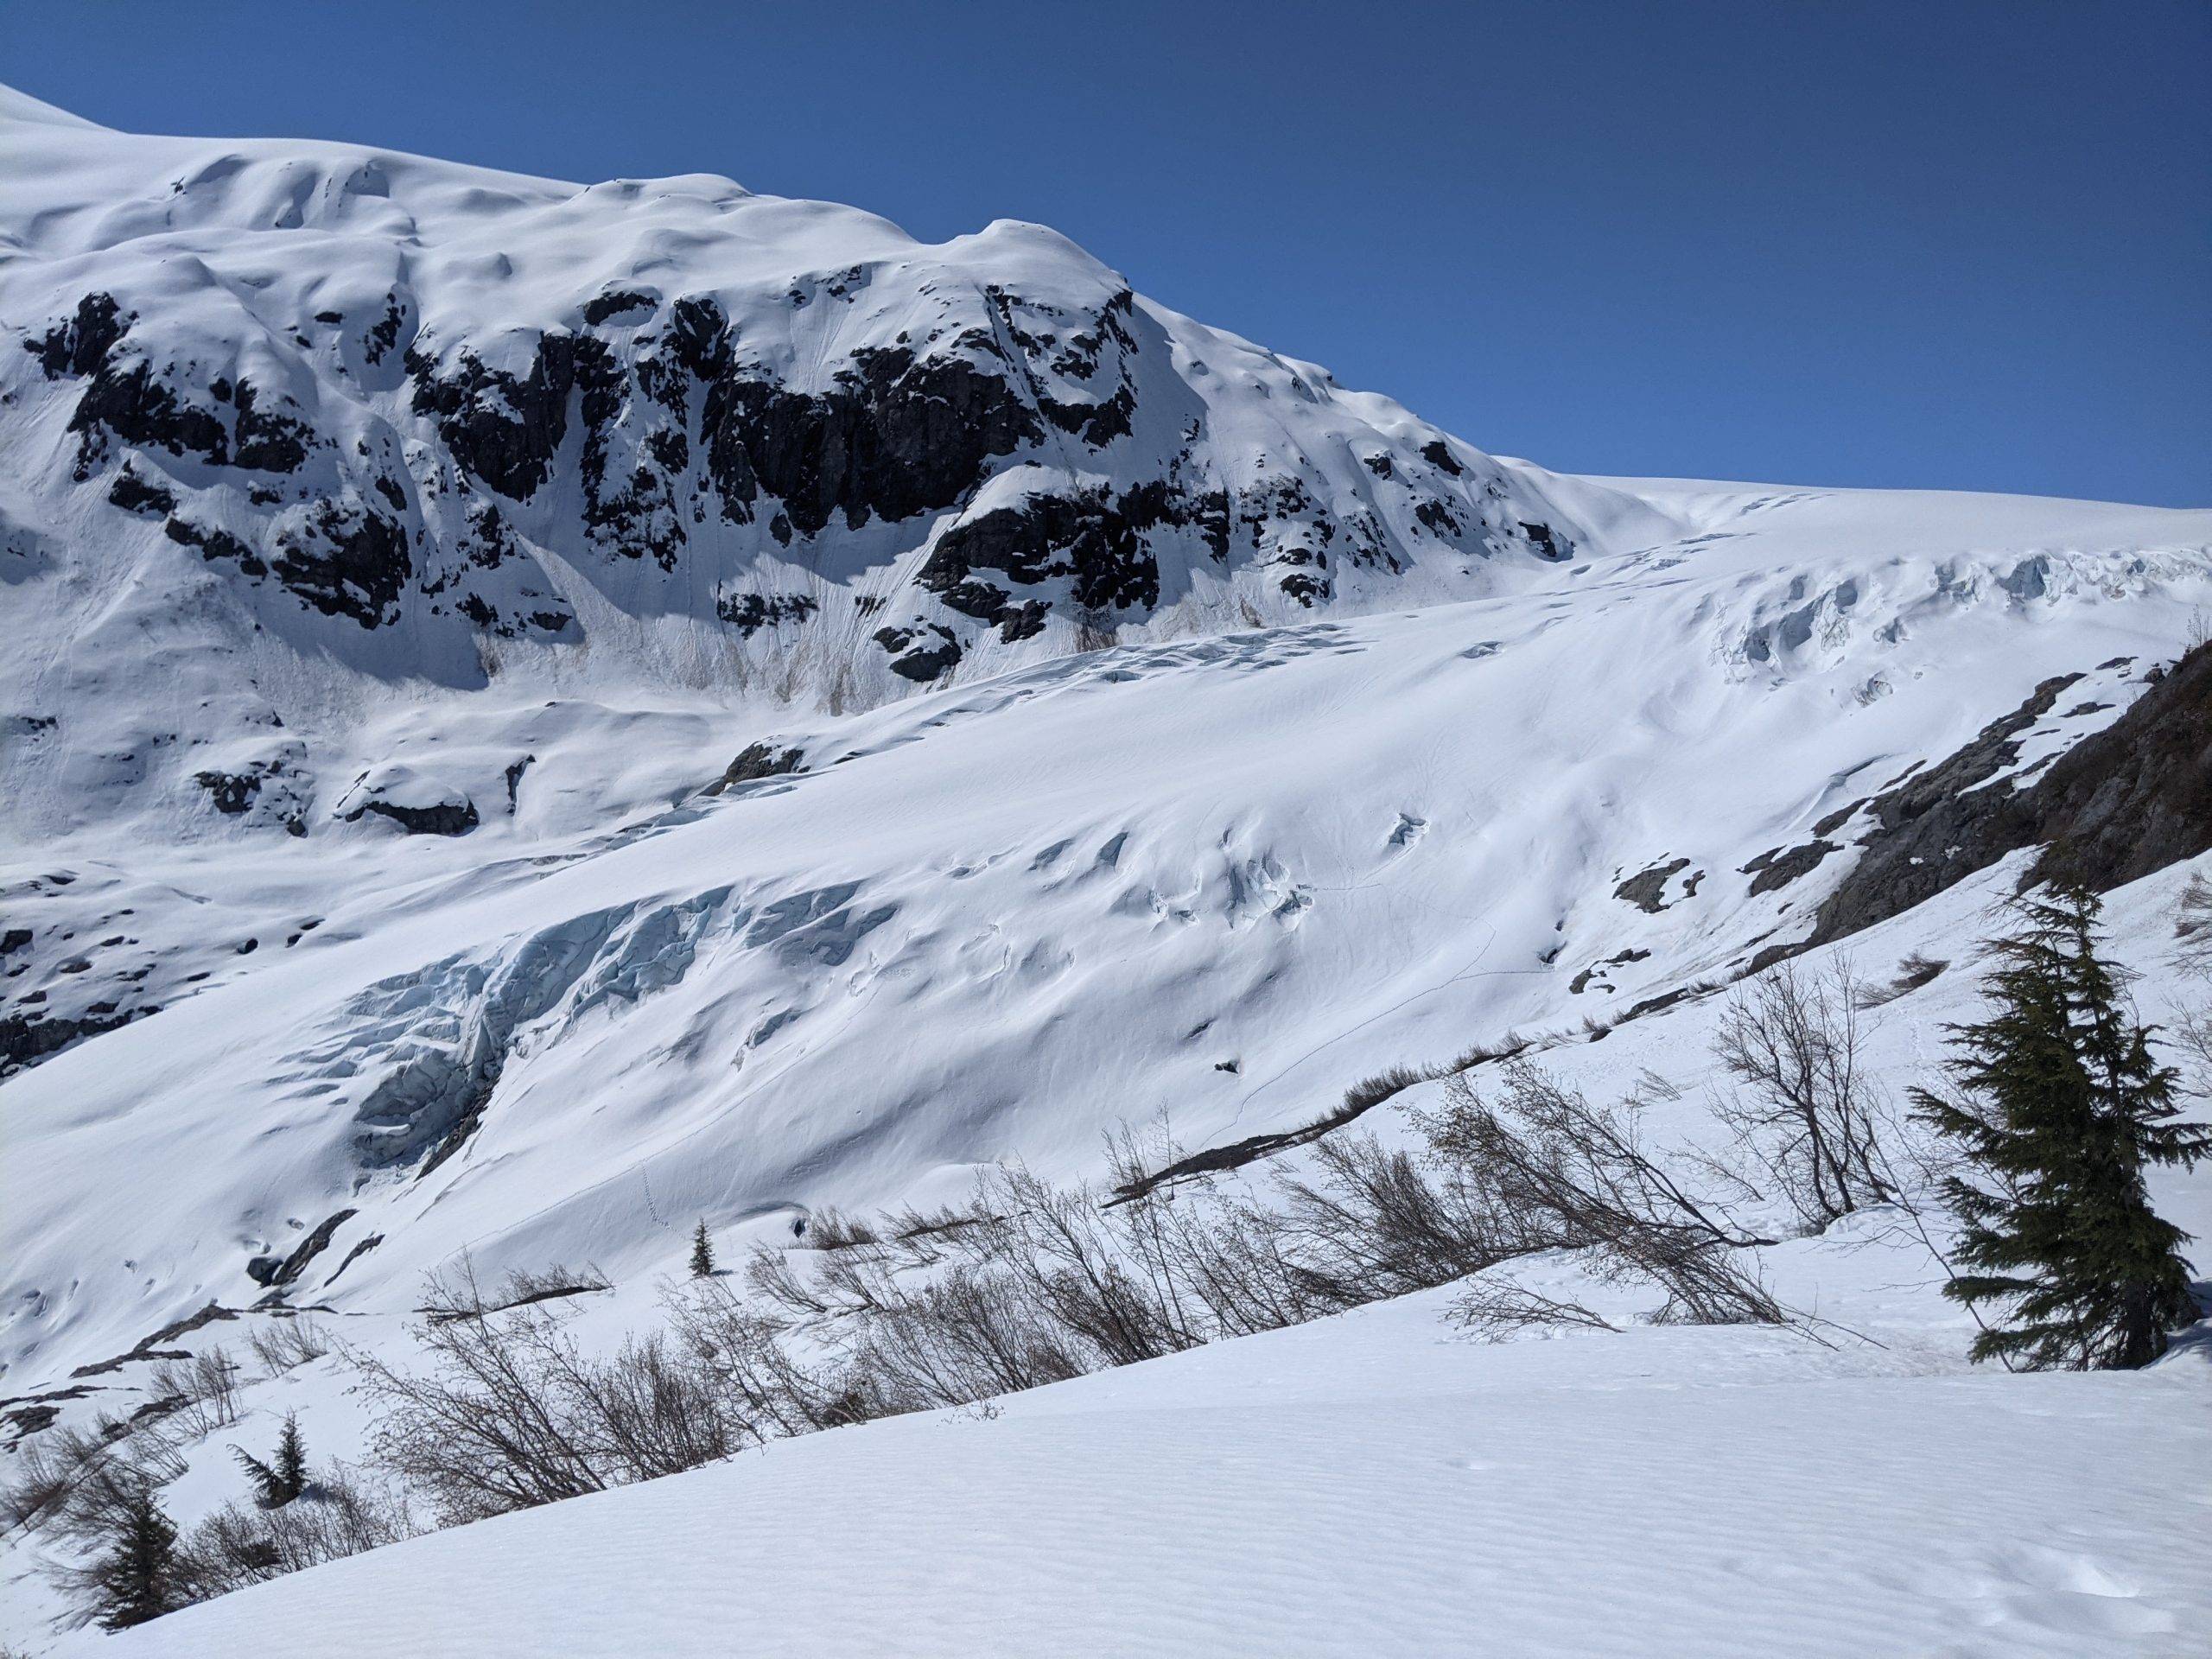 TRIP REPORT: 5/19/22 – Exit Glacier Ice Hiking Adventure